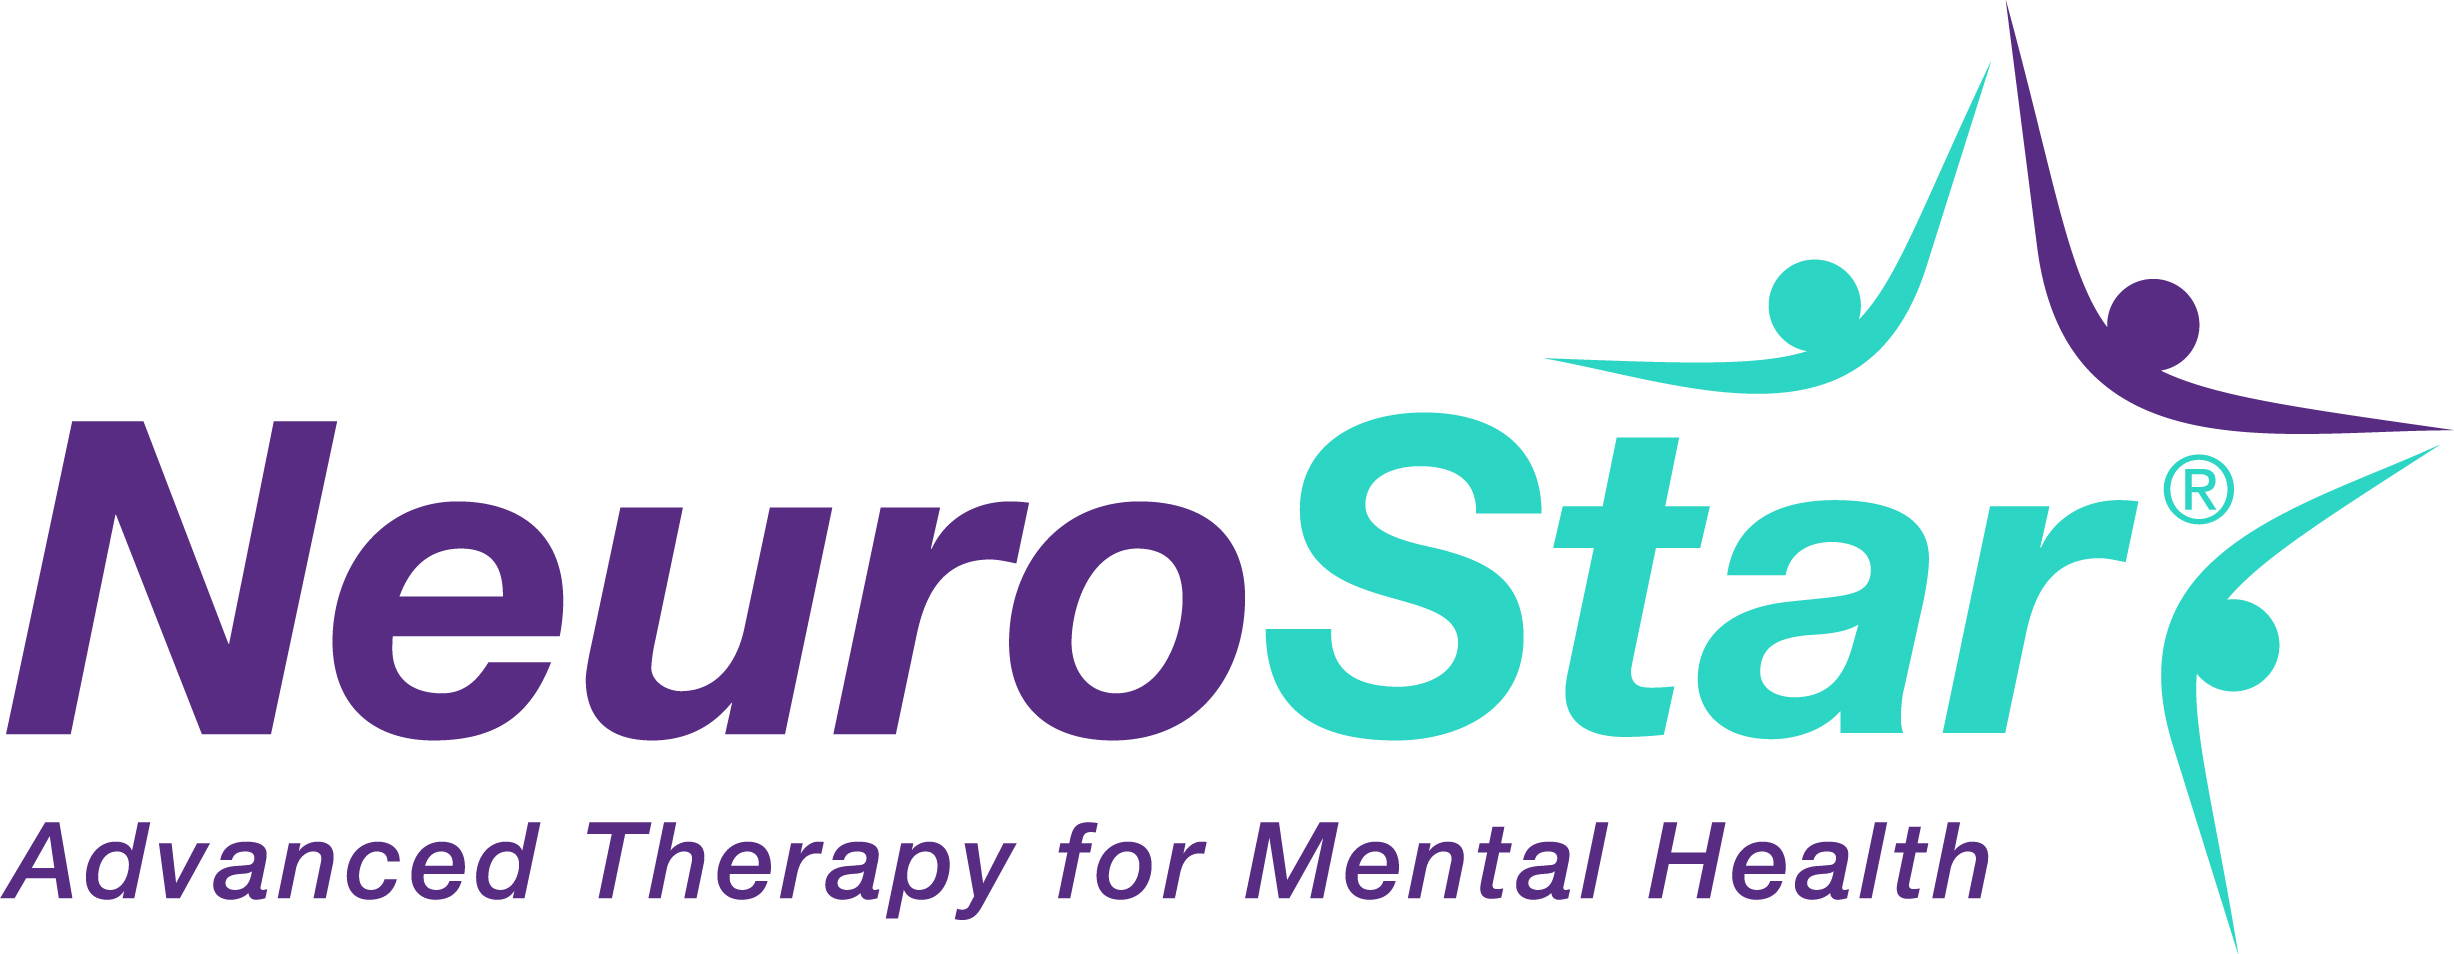 NeuroStar logo